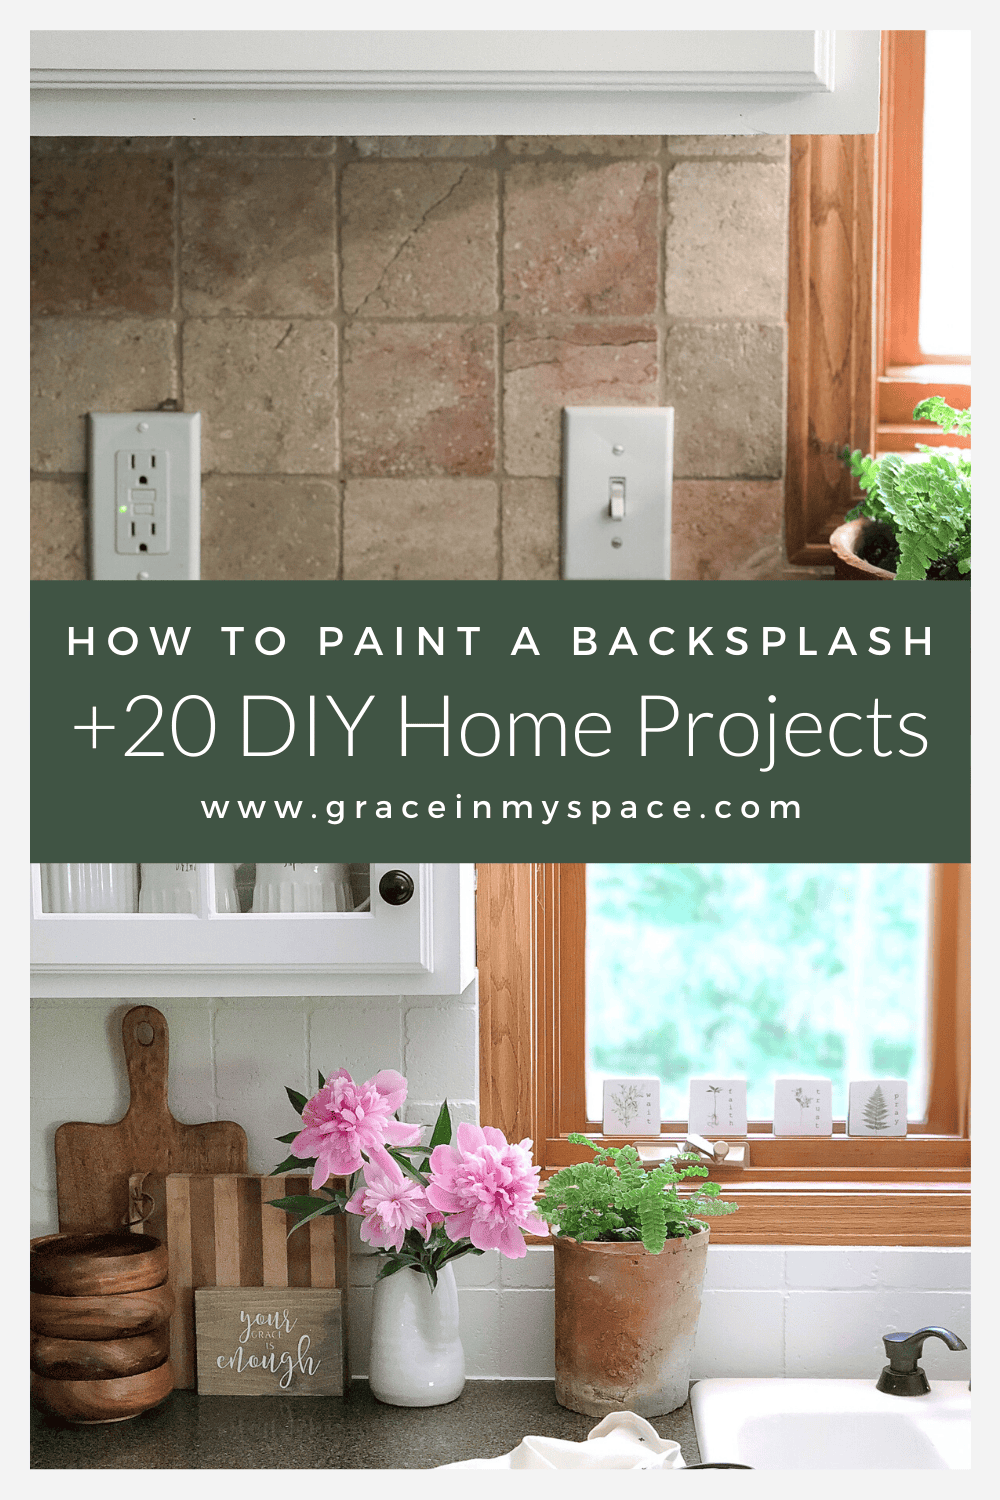 DIY Home Projects, painting a tile backsplash